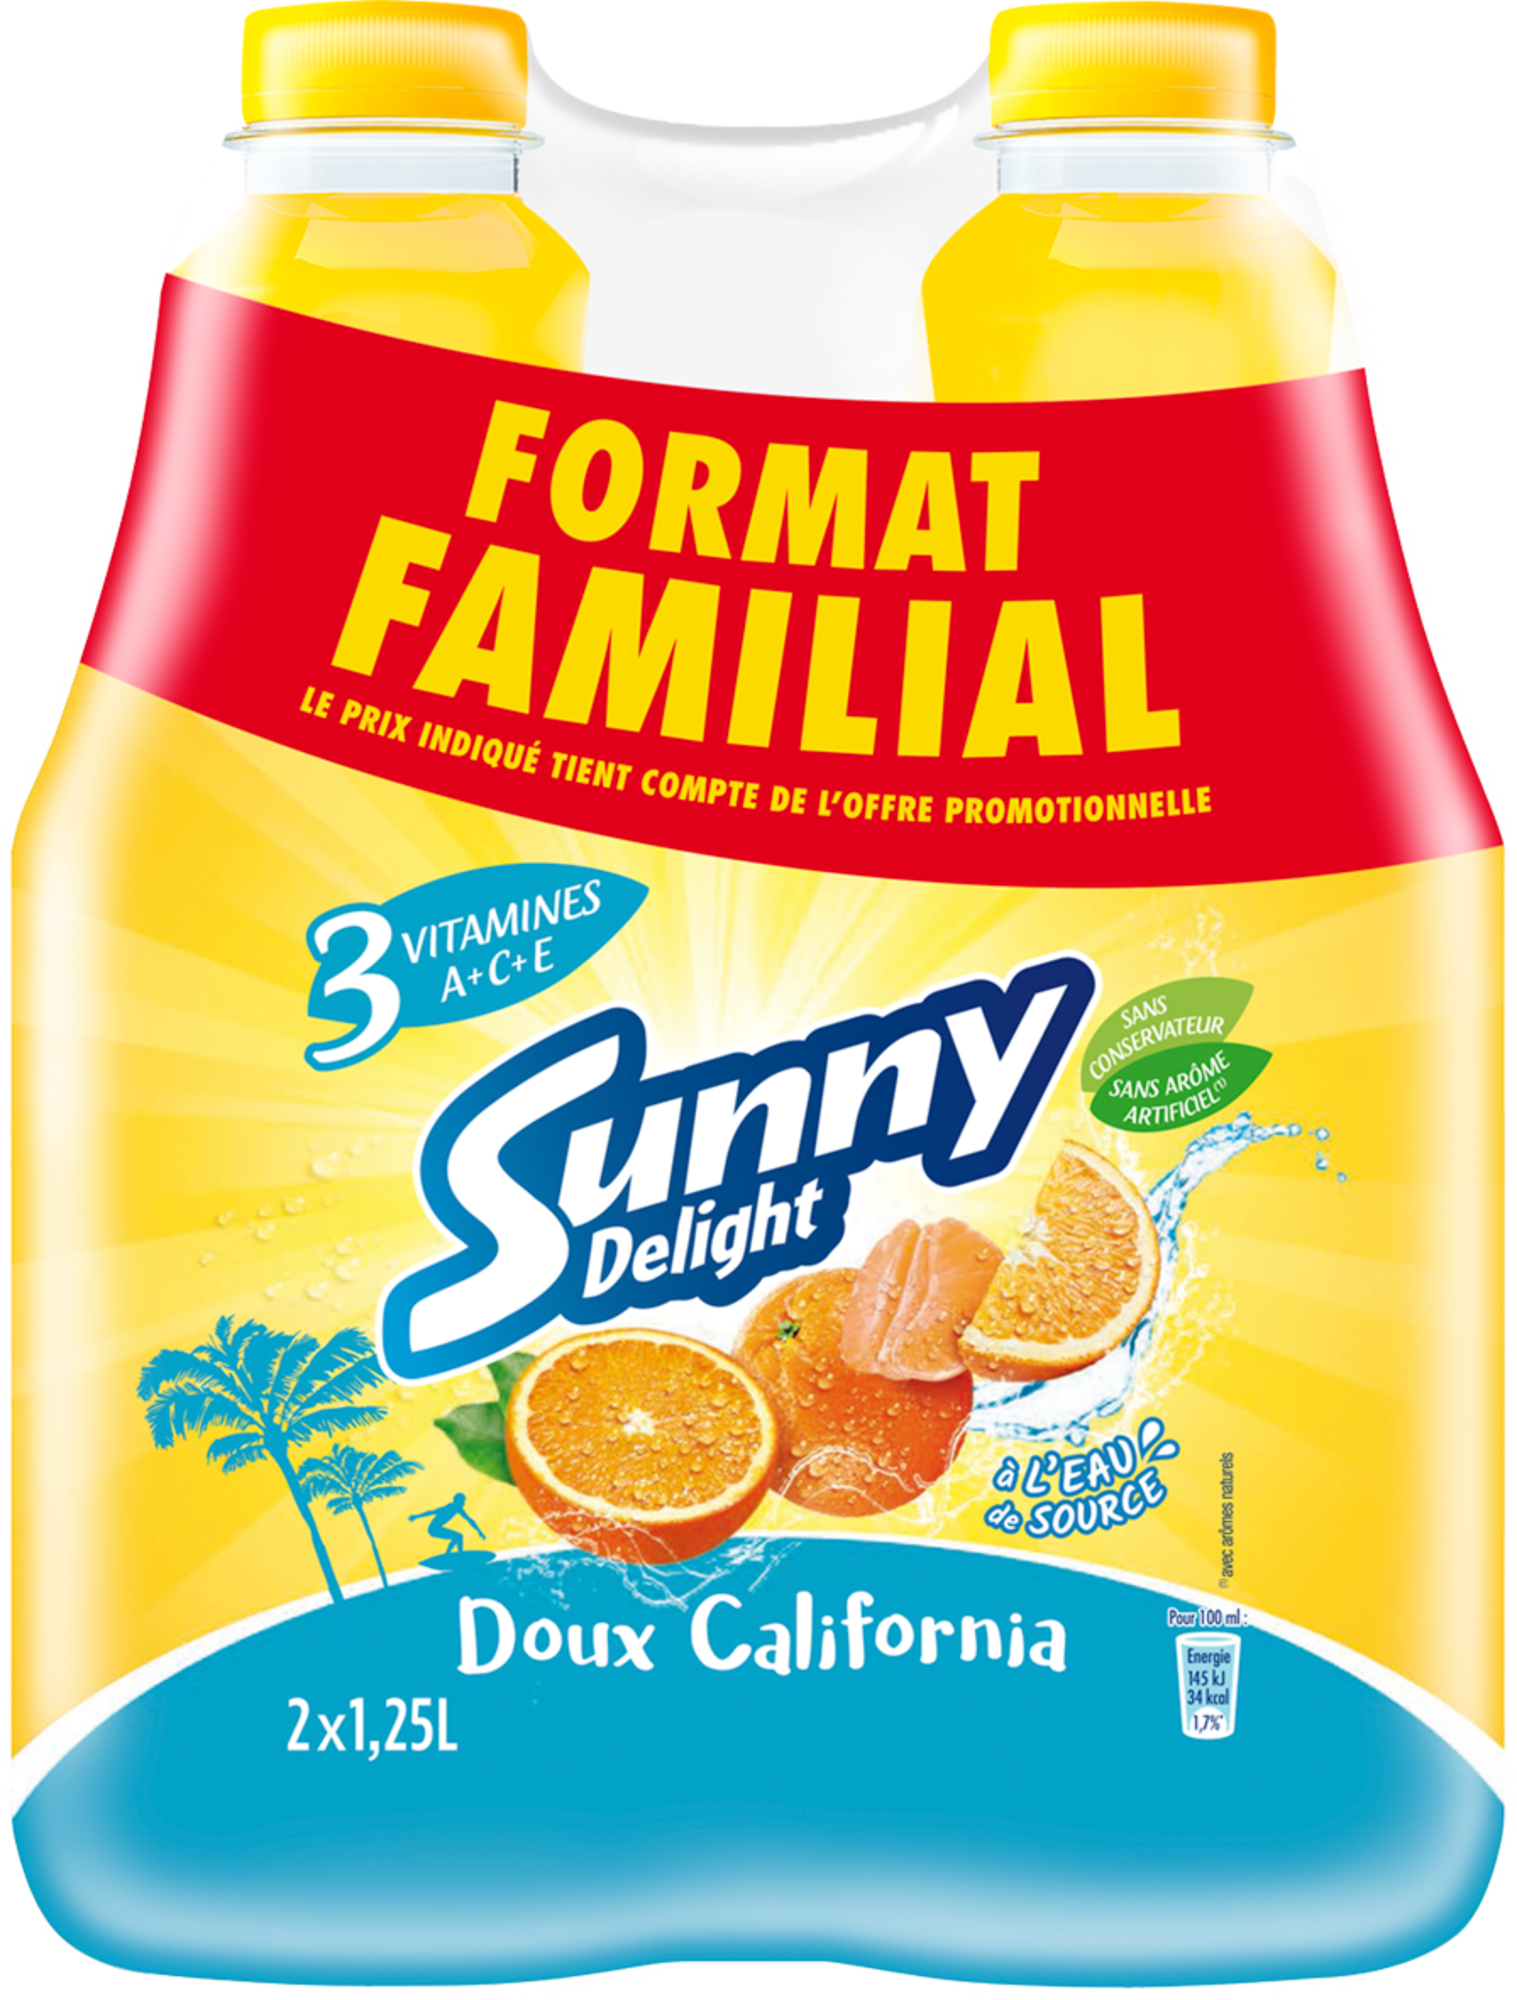 Jus doux California Format Familial